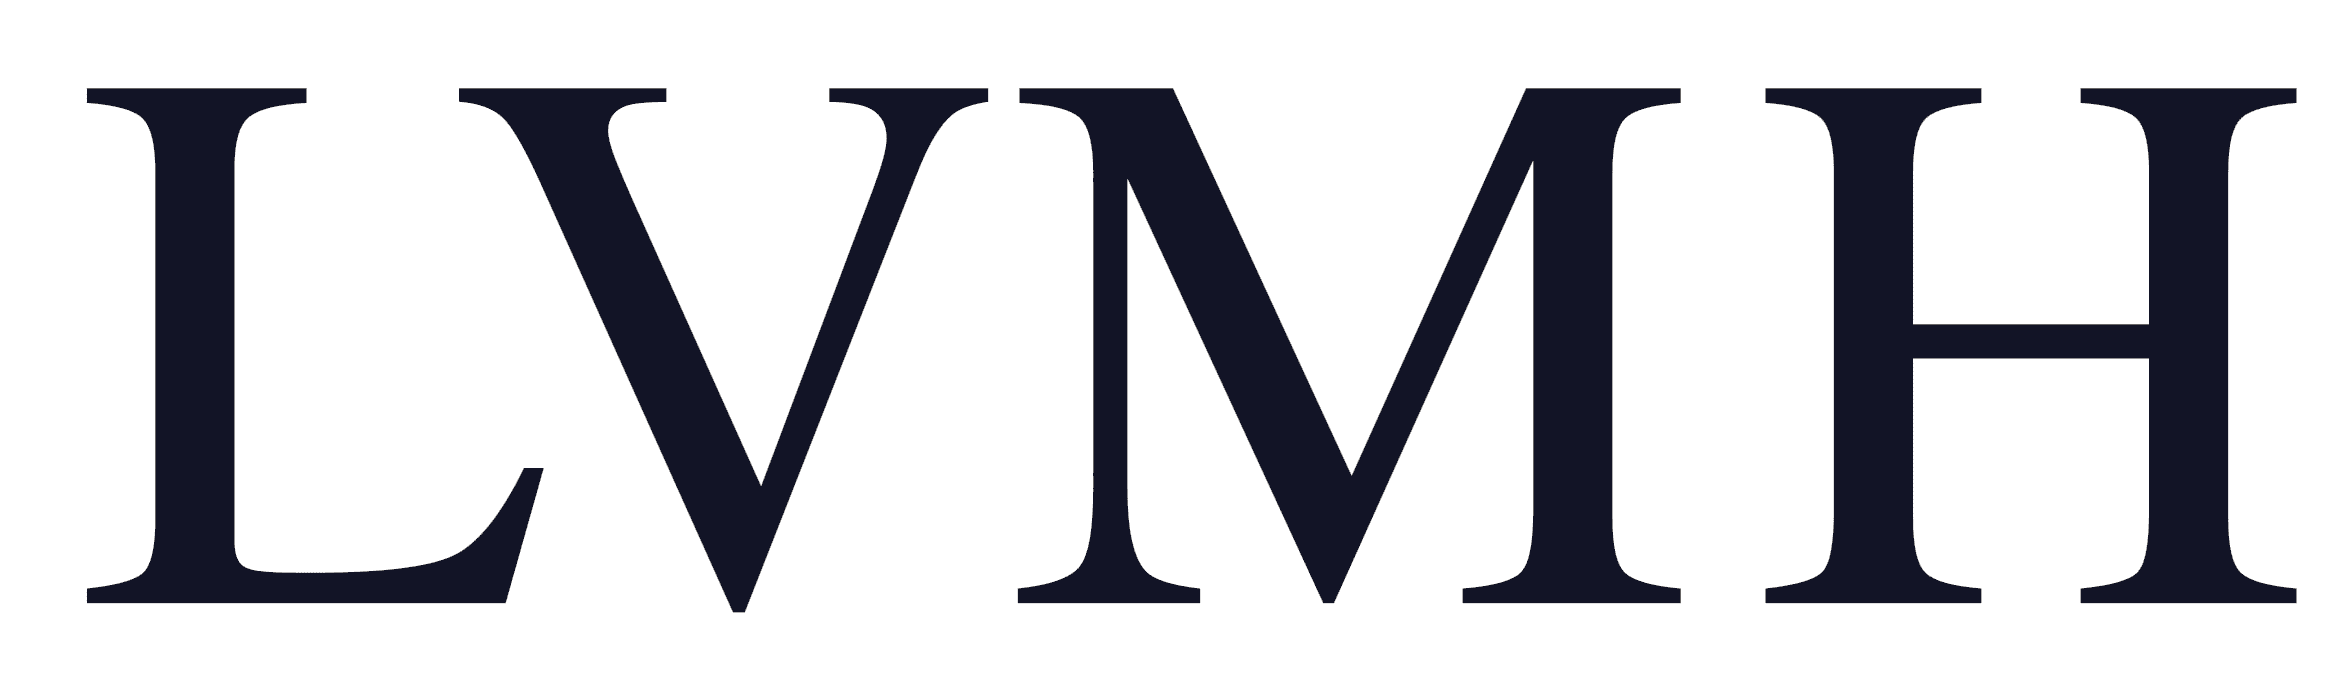 LVMH-logo.png